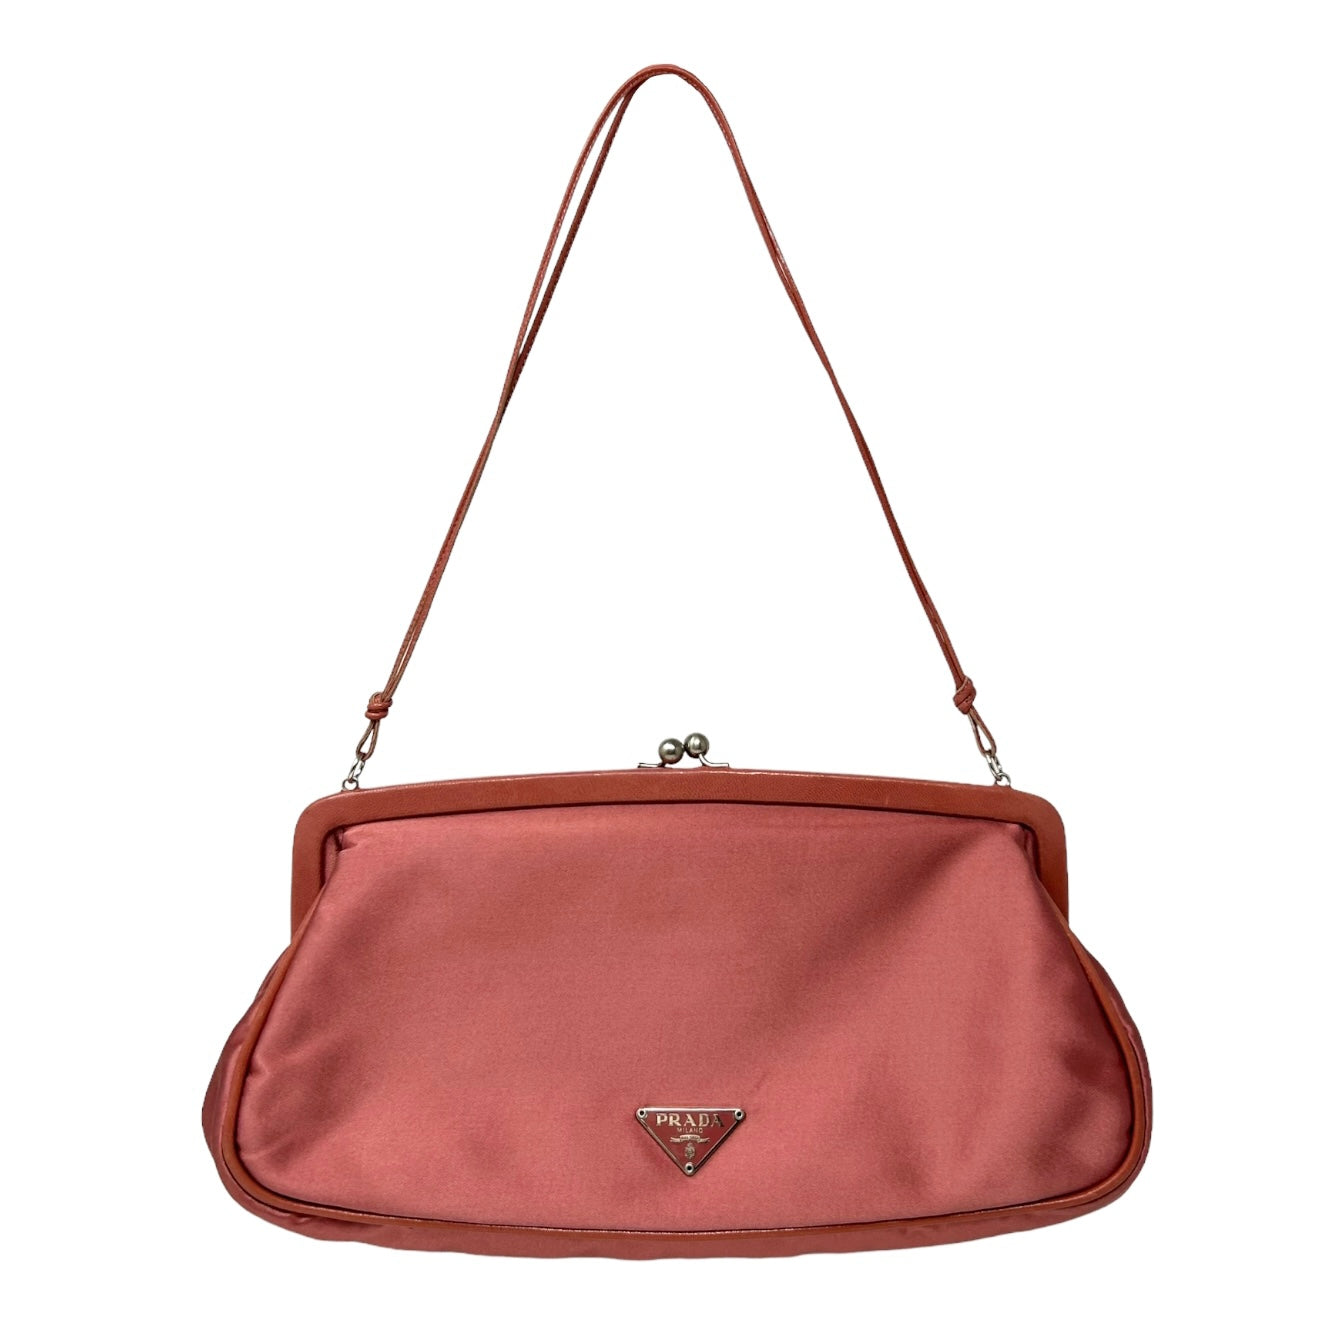 Prada Pink Satin Kisslock Bag